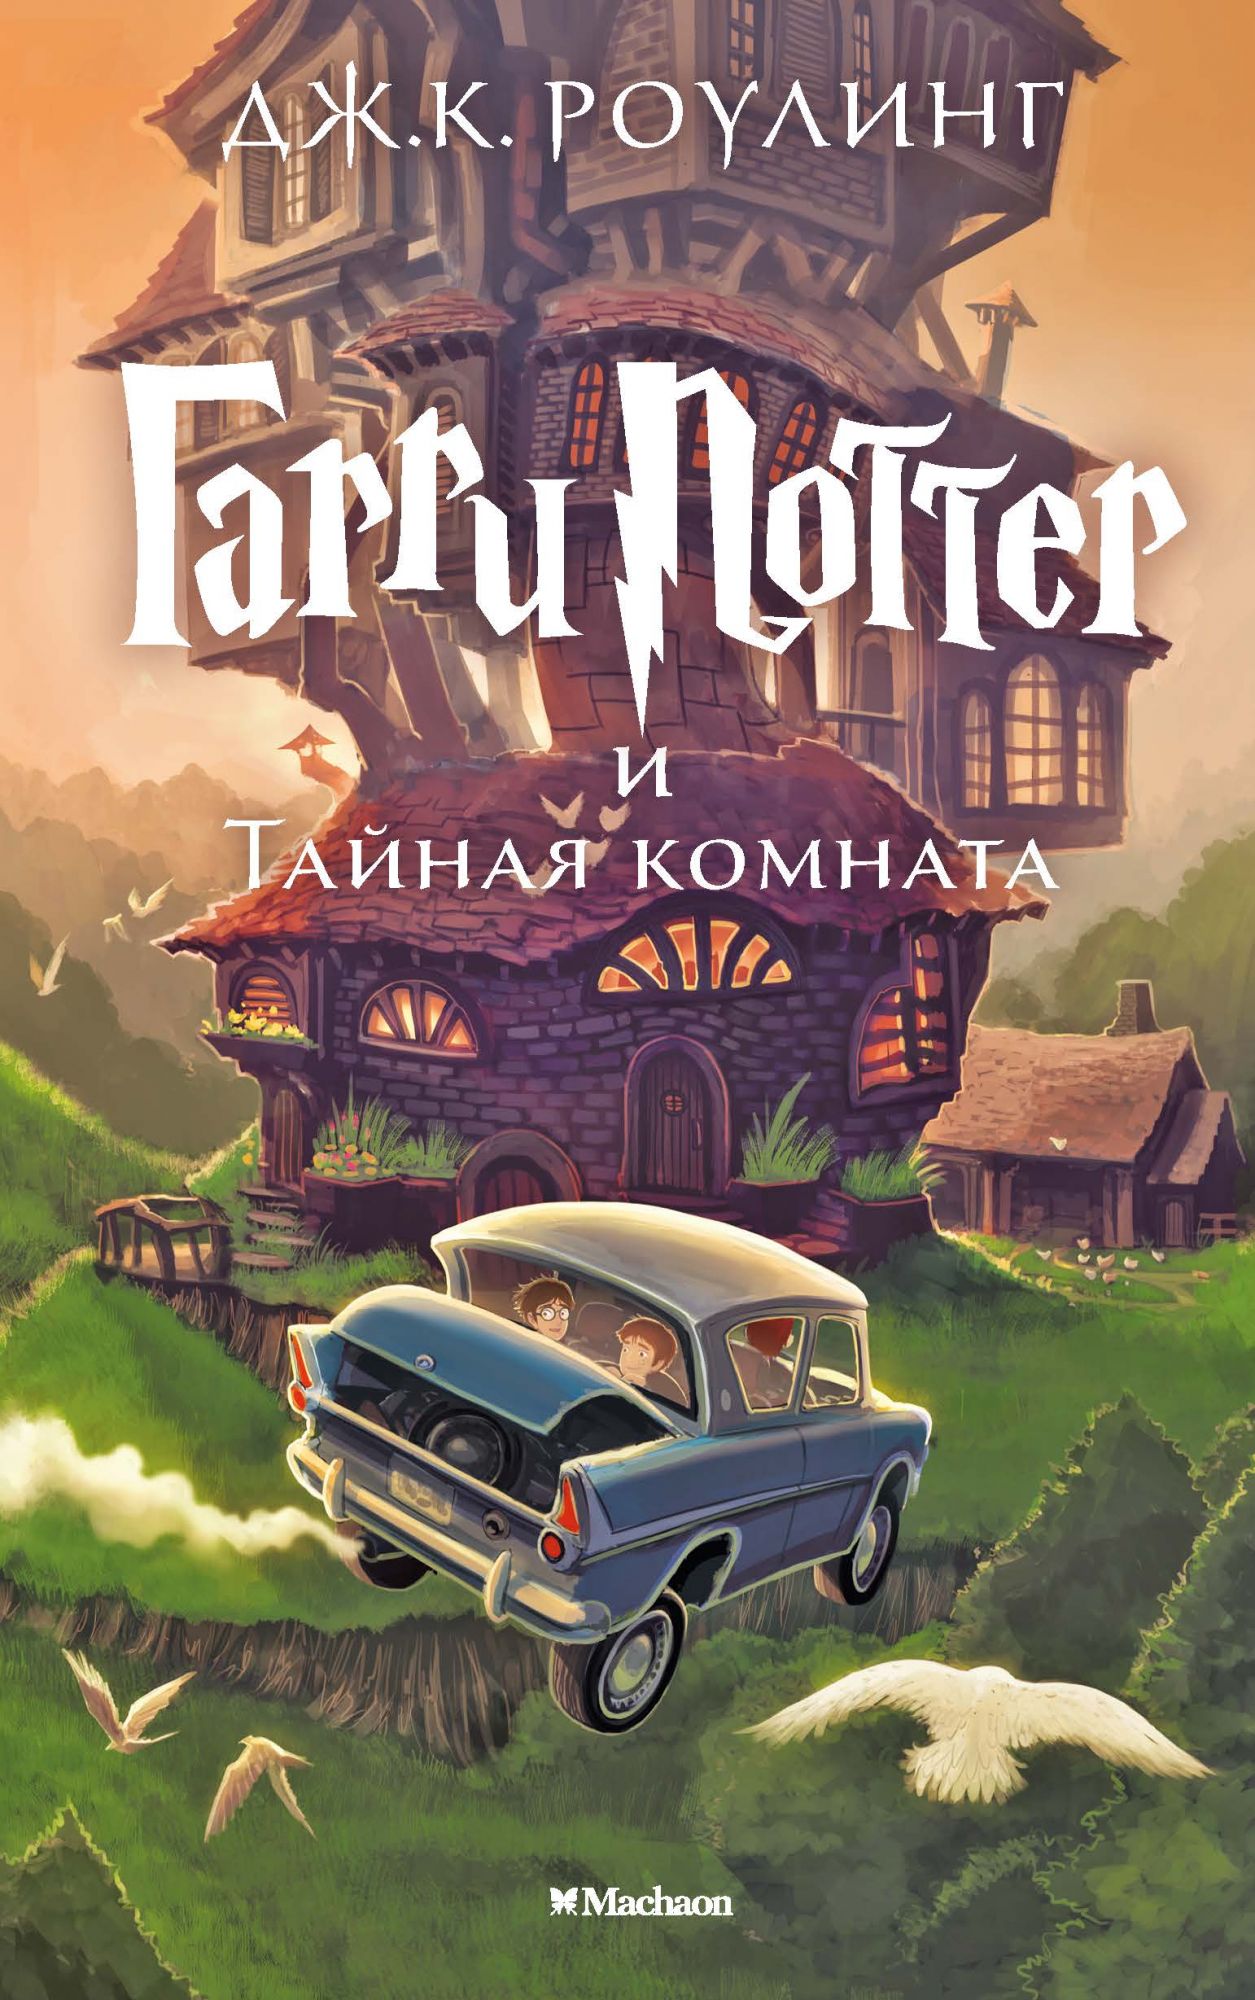 Book “Гарри Поттер и Тайная комната” by Дж.К. Роулинг — 2021